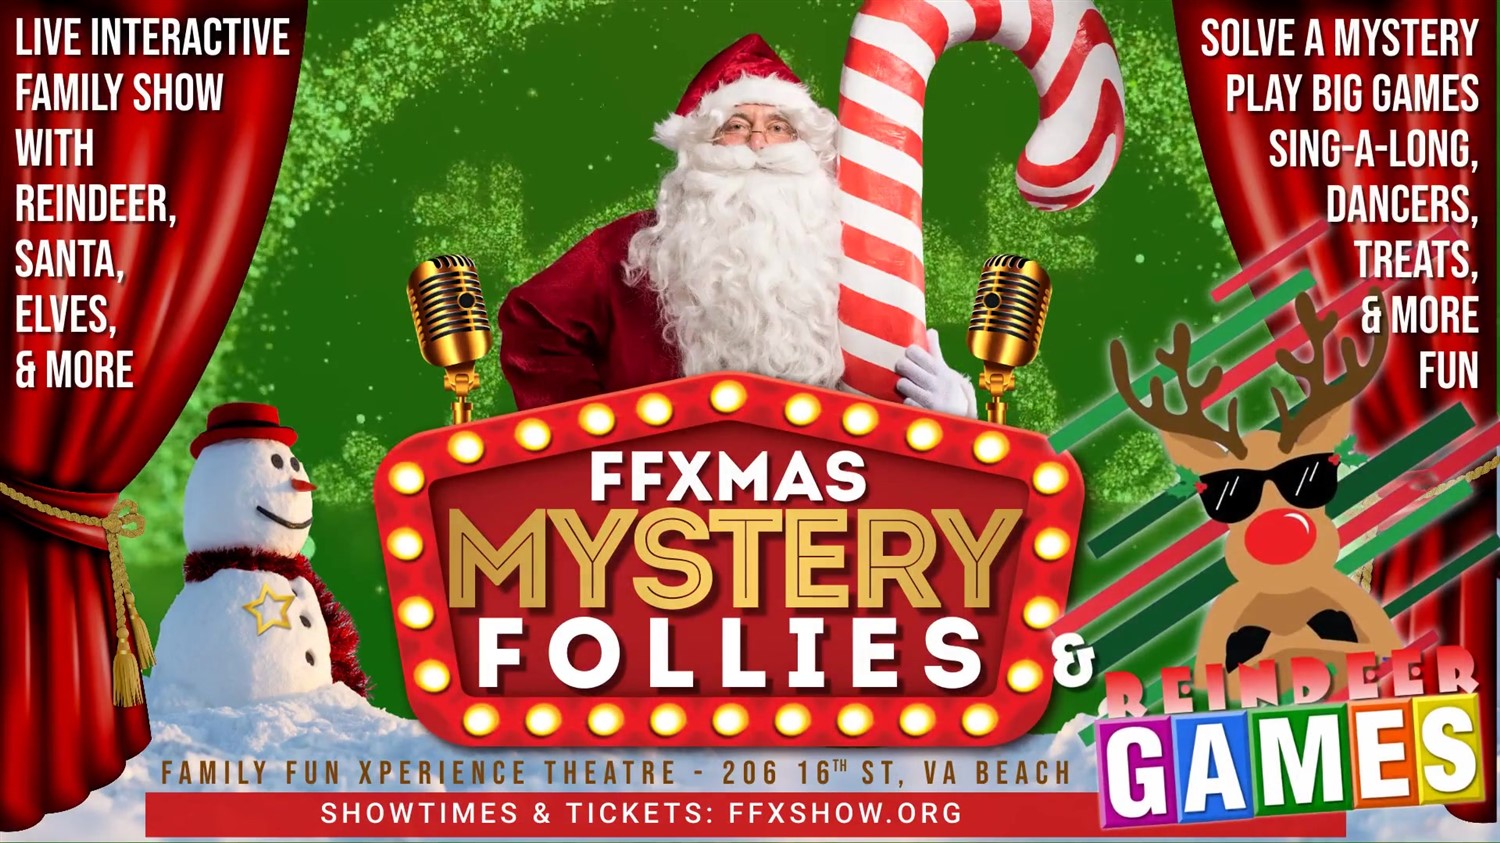 FFXmas MYSTERY FOLLIES Plus Bonus Reindeer Games on dic. 02, 19:00@FFX Theatre - Elegir asientoCompra entradas y obtén información enFamily Fun Xperience tickets.ffxshow.org